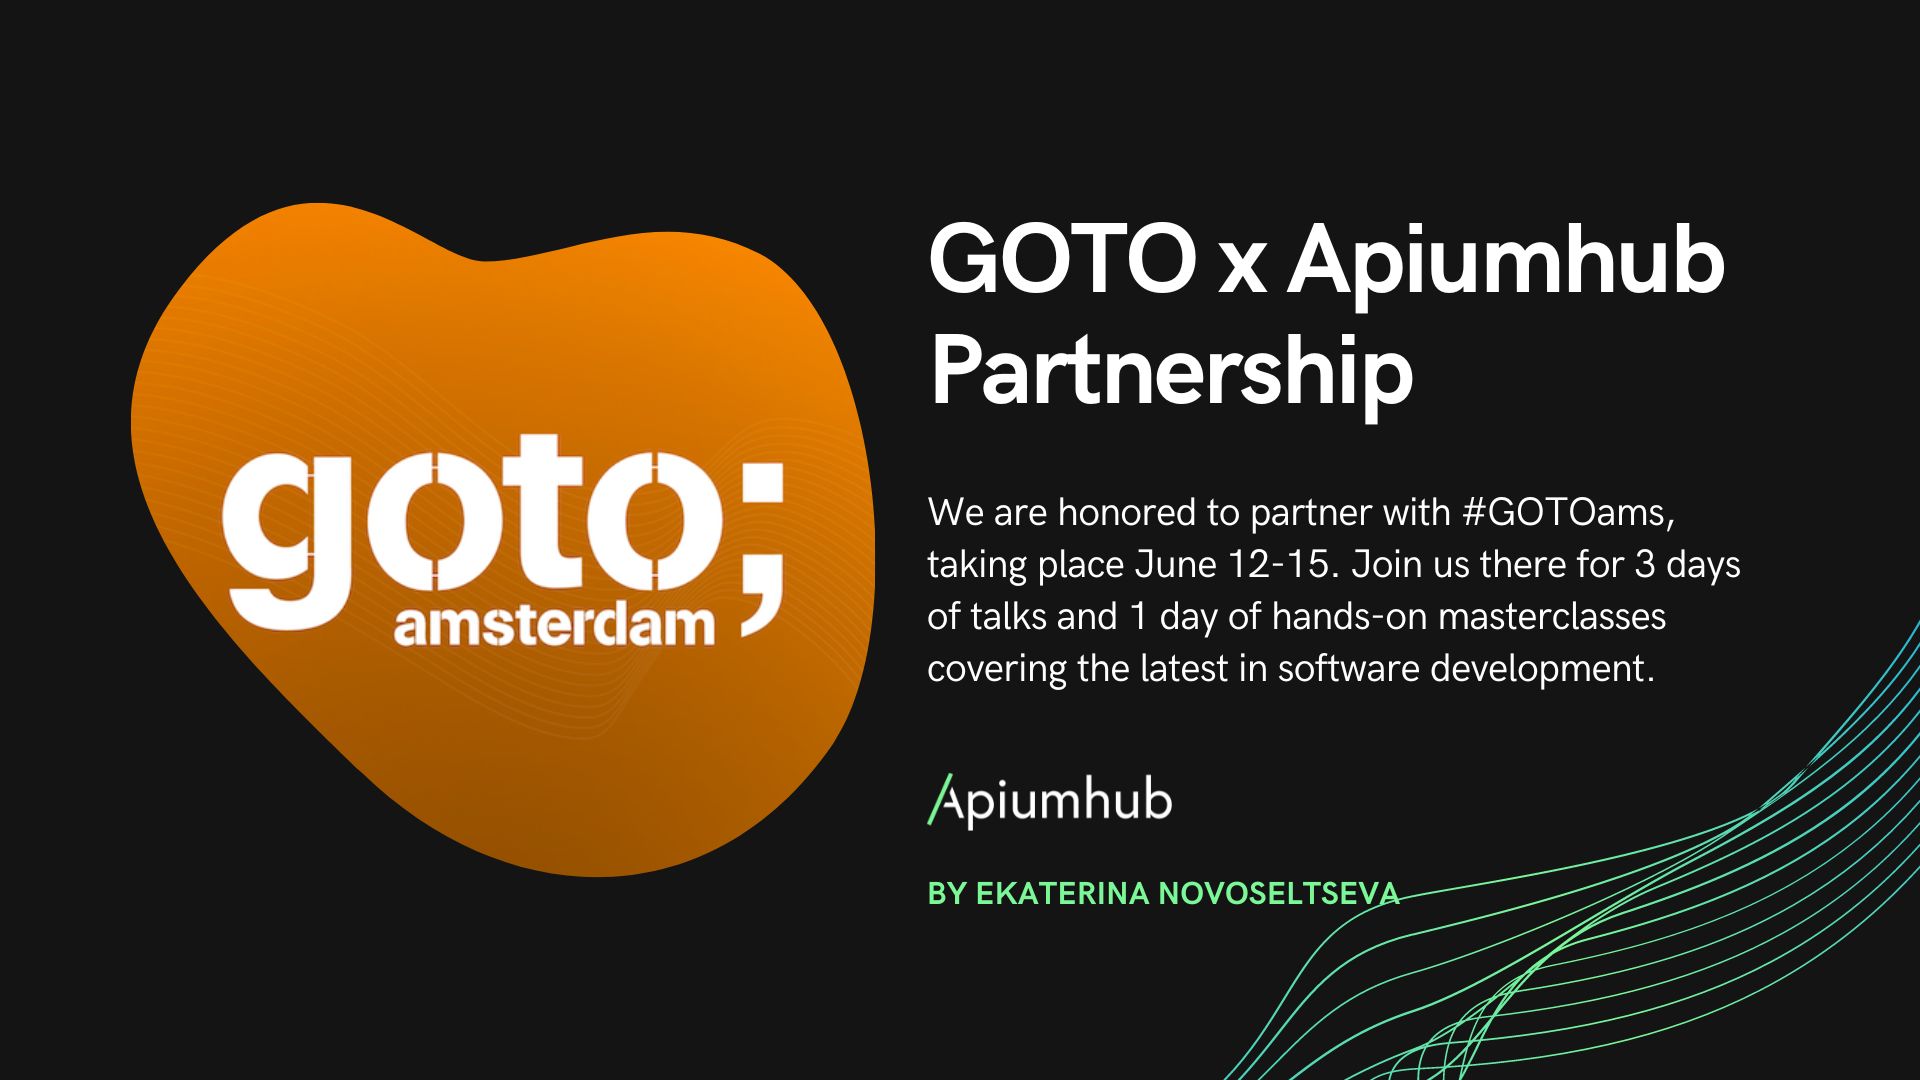 GOTO x Apiumhub Partnership